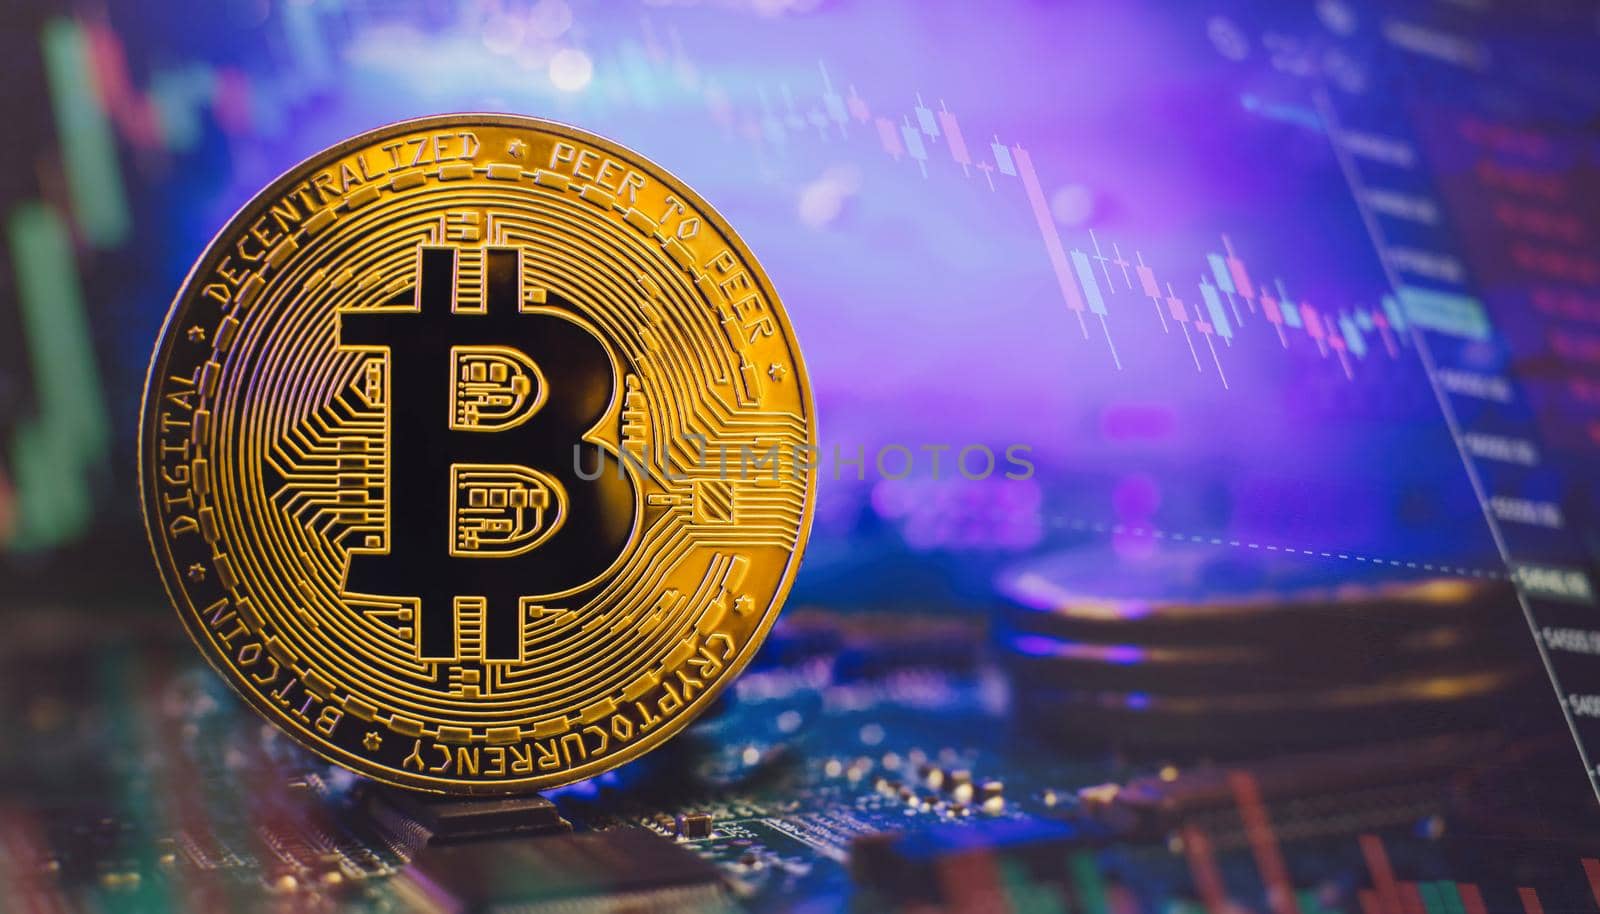 Blockchain technology bitcoin mining concept. Bitcoin golden coin on computer circuit board. banner copy space